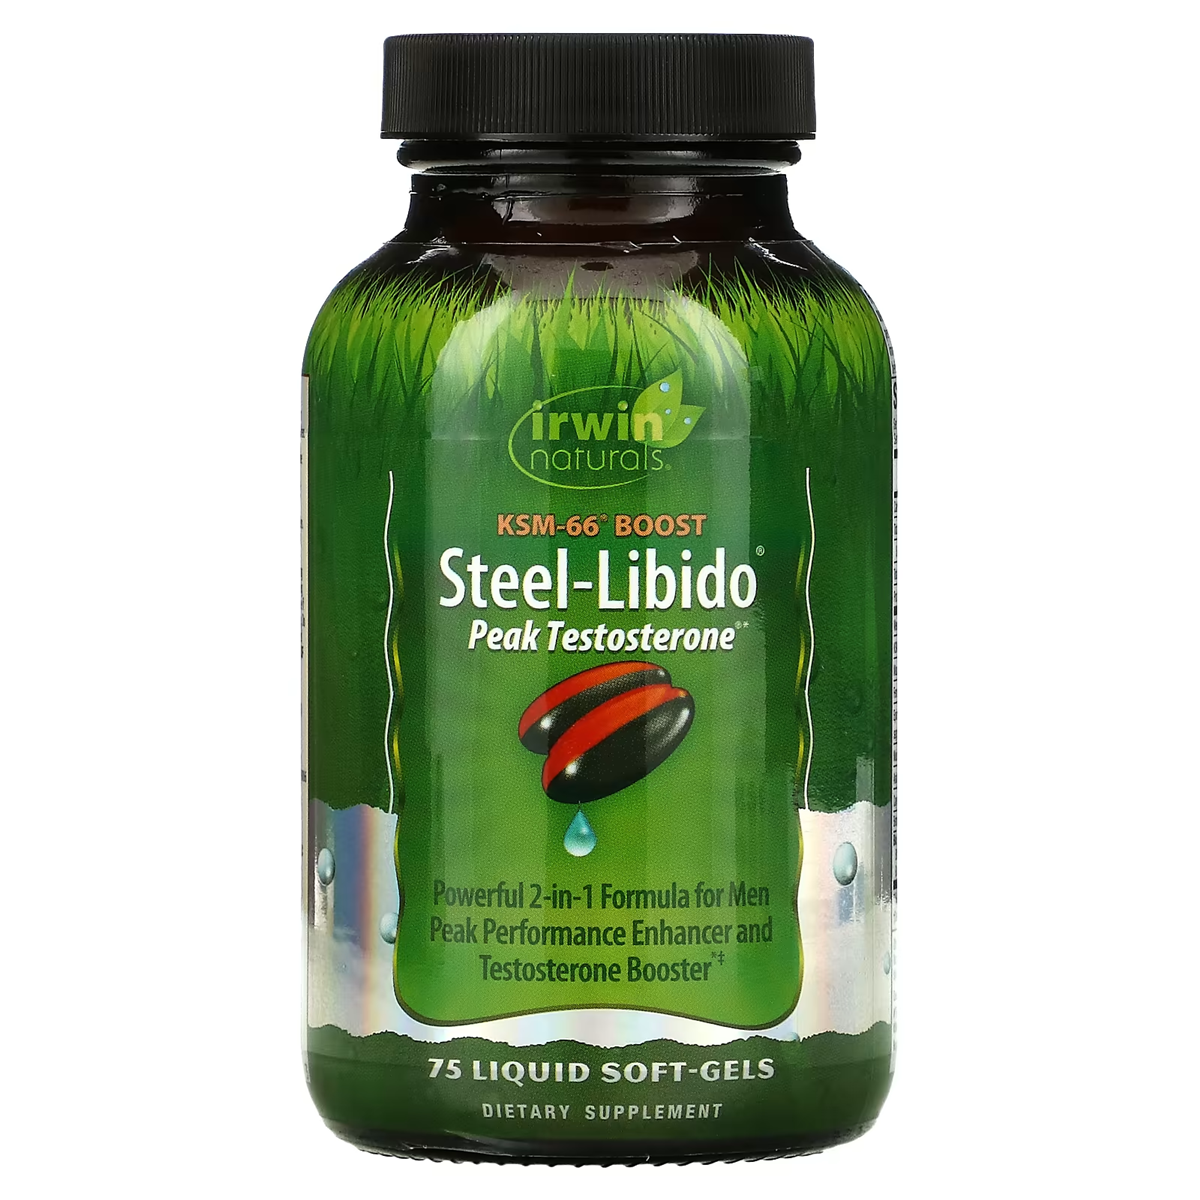 Irwin Naturals Steel-Libido Peak Testosterone (KSM-66® Booster) / 75 LIQUID SOFT-GELS